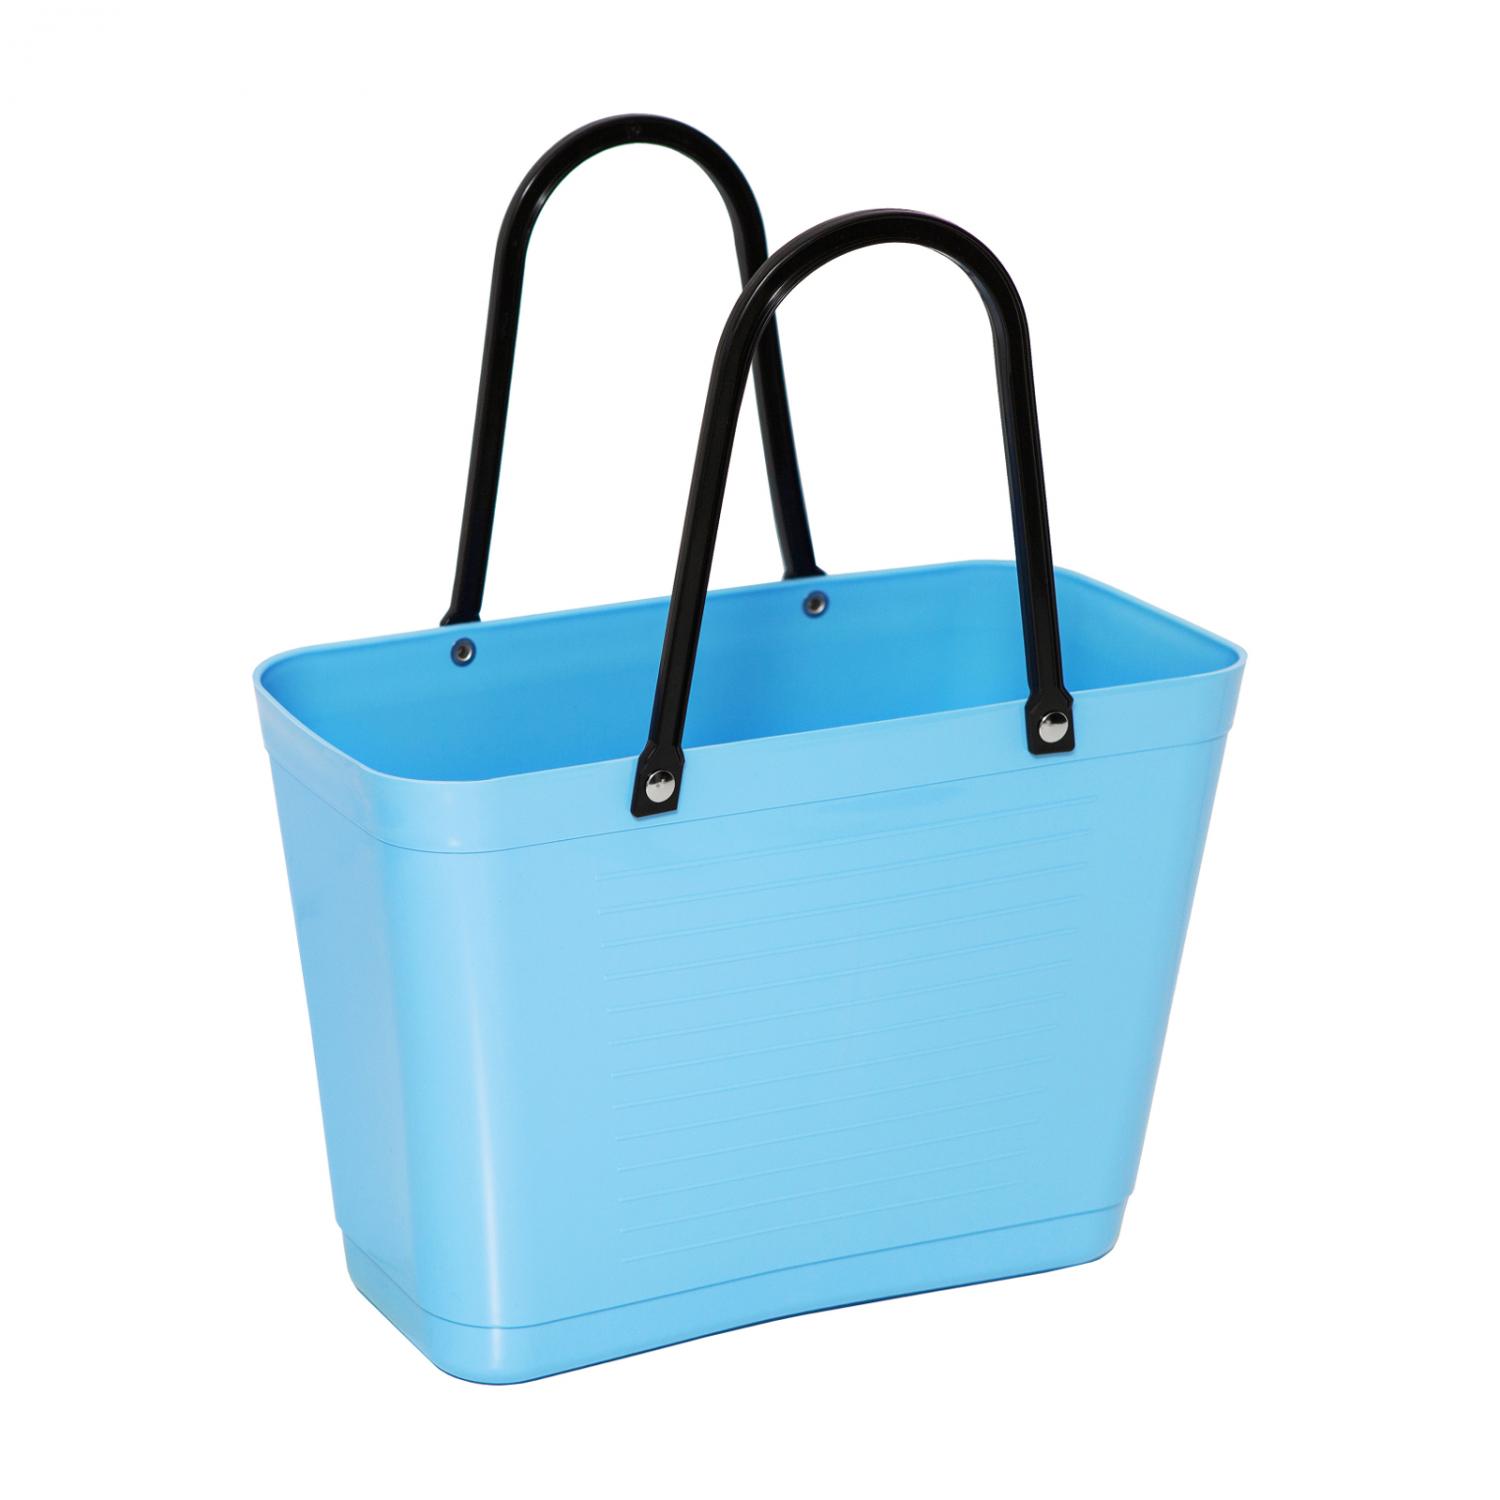 Hinza bag Small Light Blue - Green Plastic